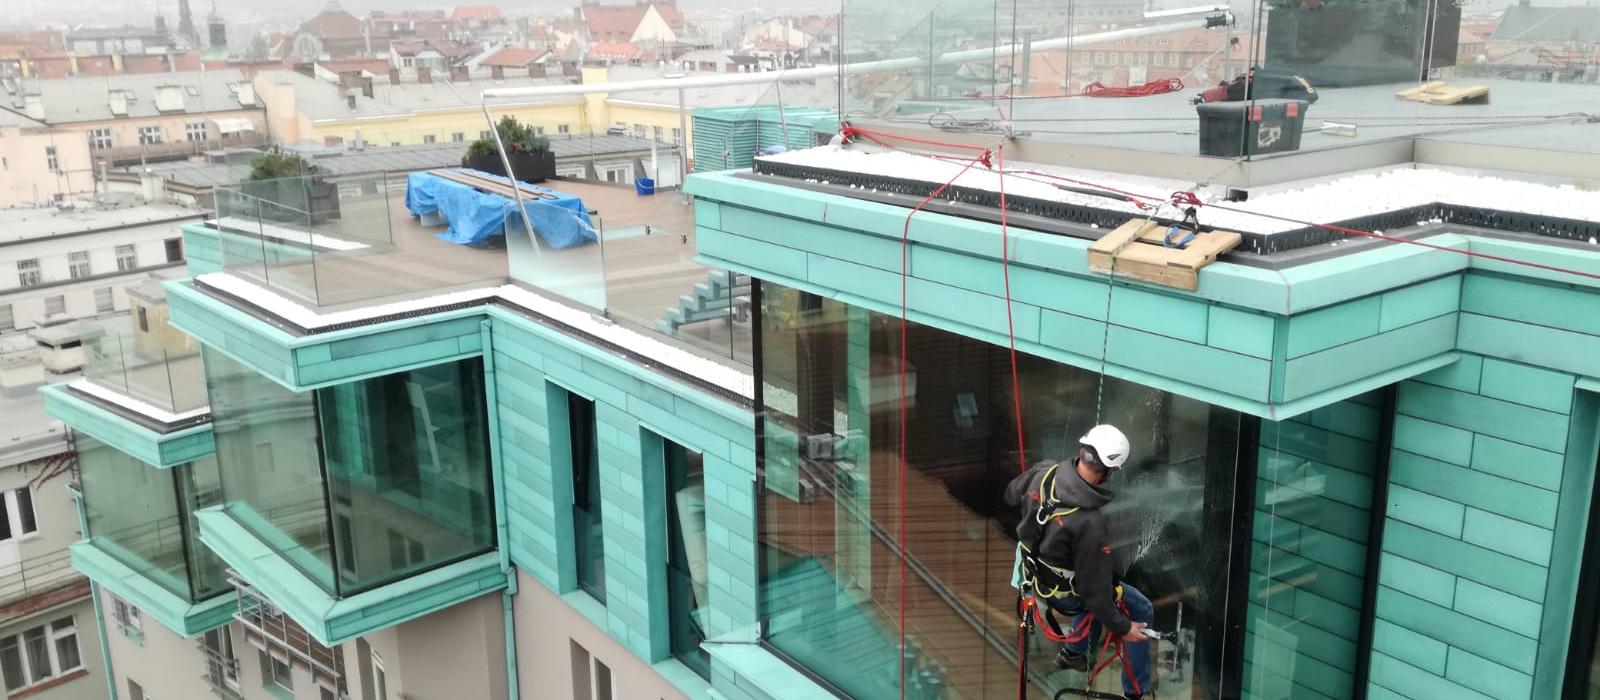 Výškové práce v Praze a okolí - Mytí oken a teras bytového domu v Praze